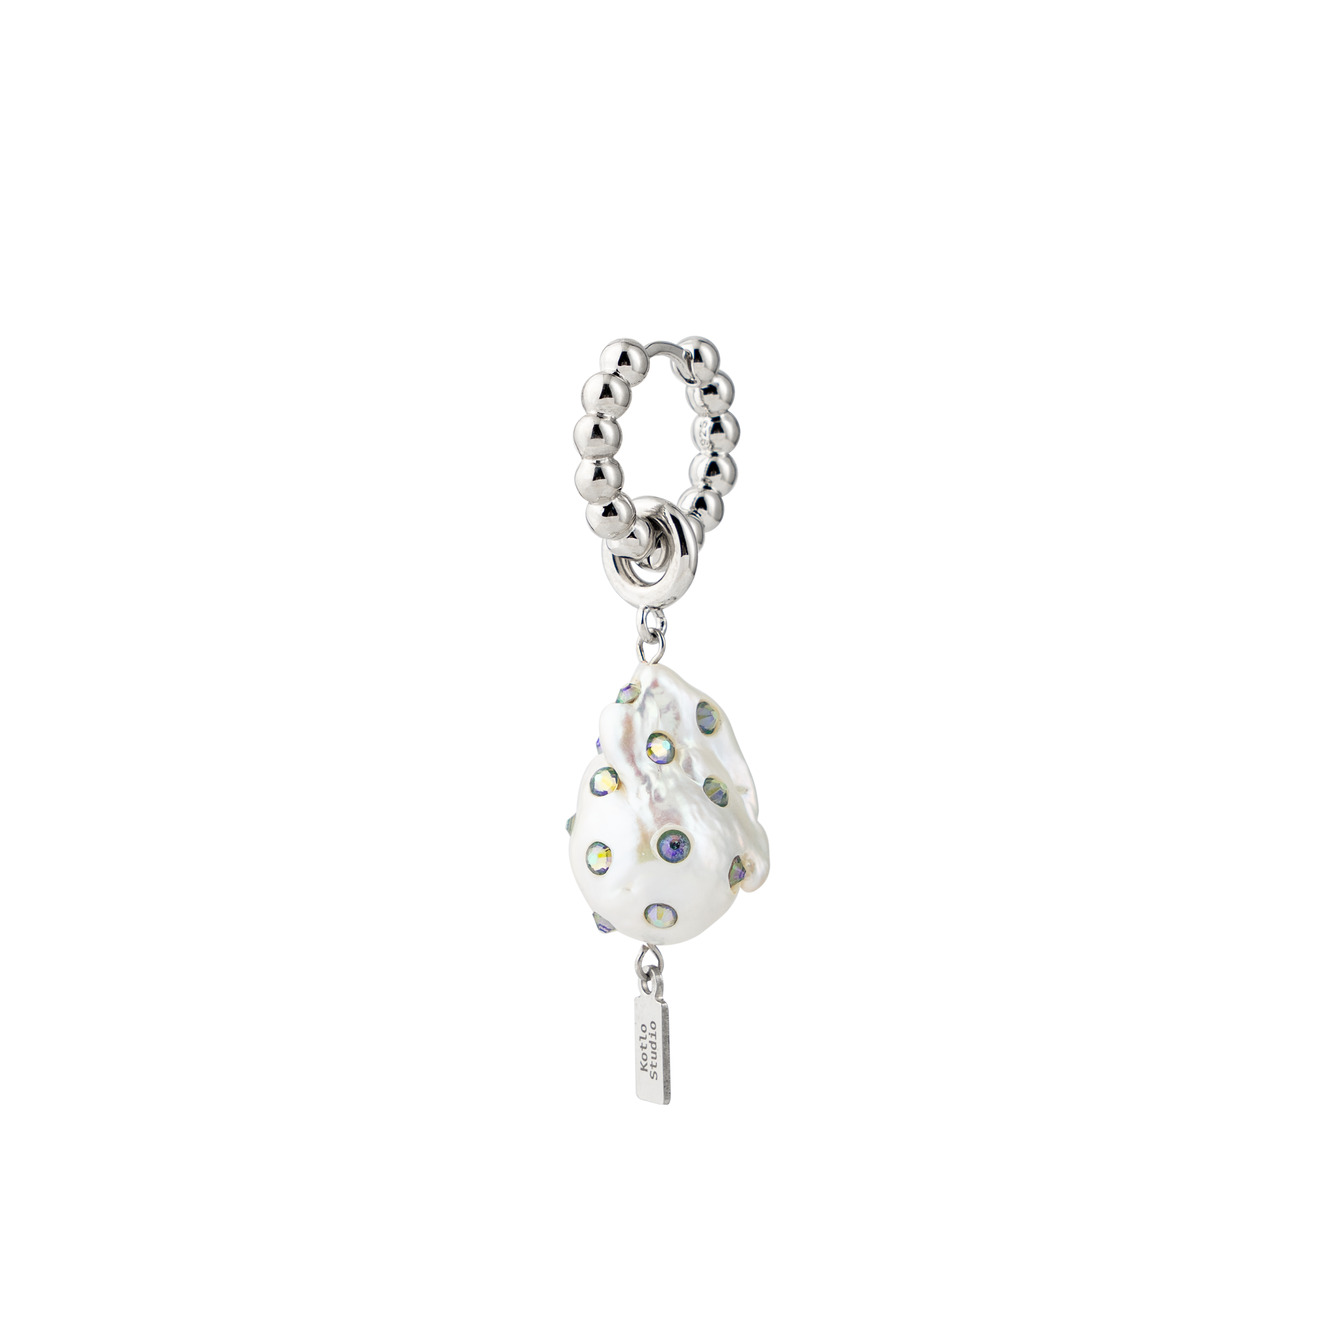 ringstone ожерелье из бирюзы с барочной жемчужиной Kotlo Studio Baroque Tear Silver. Моносерьга с барочной жемчужиной в кристаллах